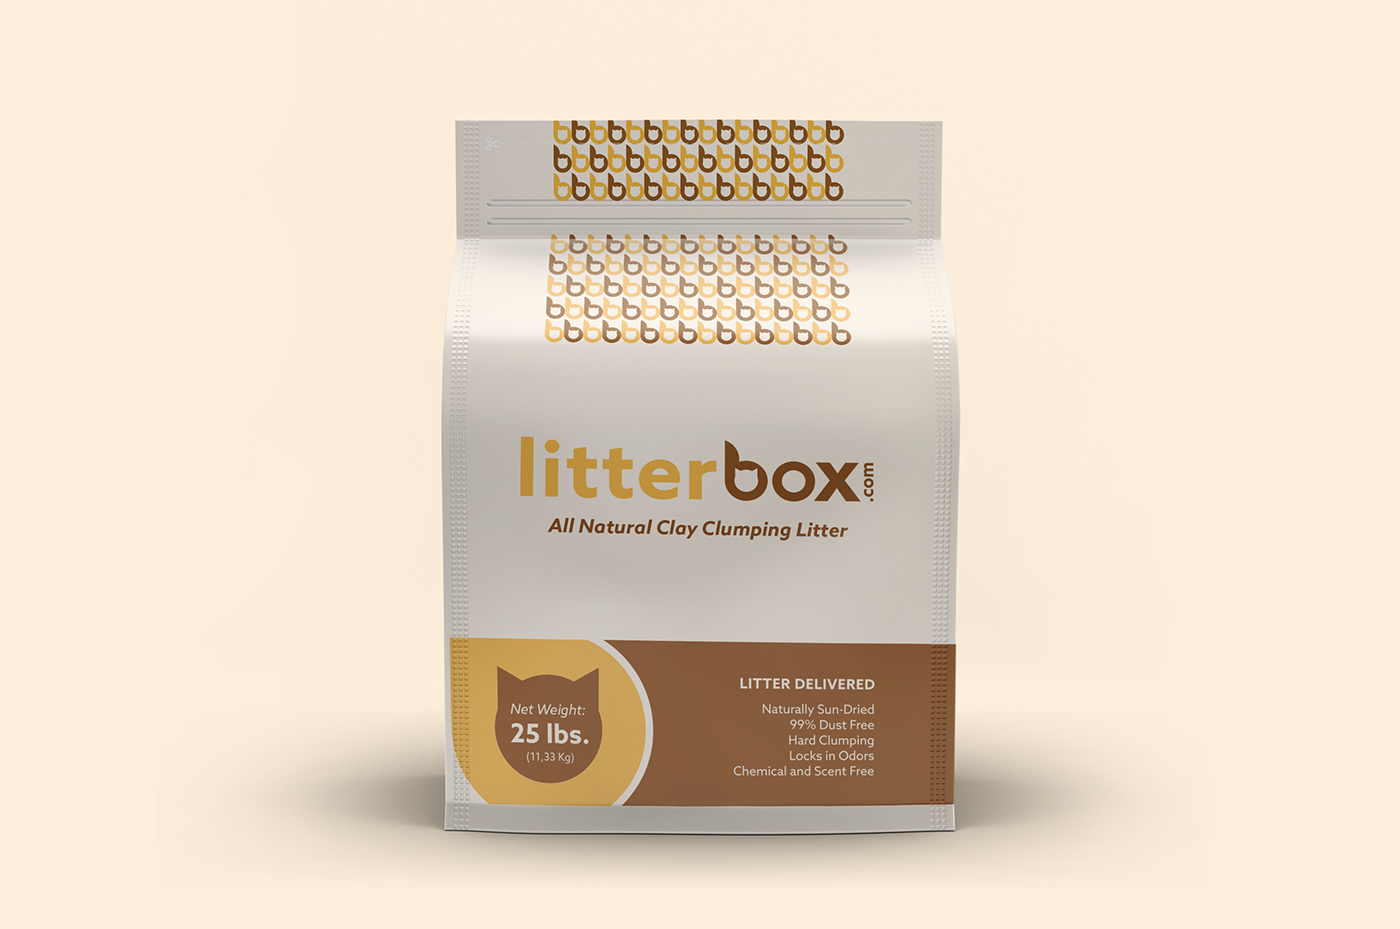 litterbox猫砂品牌品牌VI视觉形式设计欣赏-深圳VI设计13